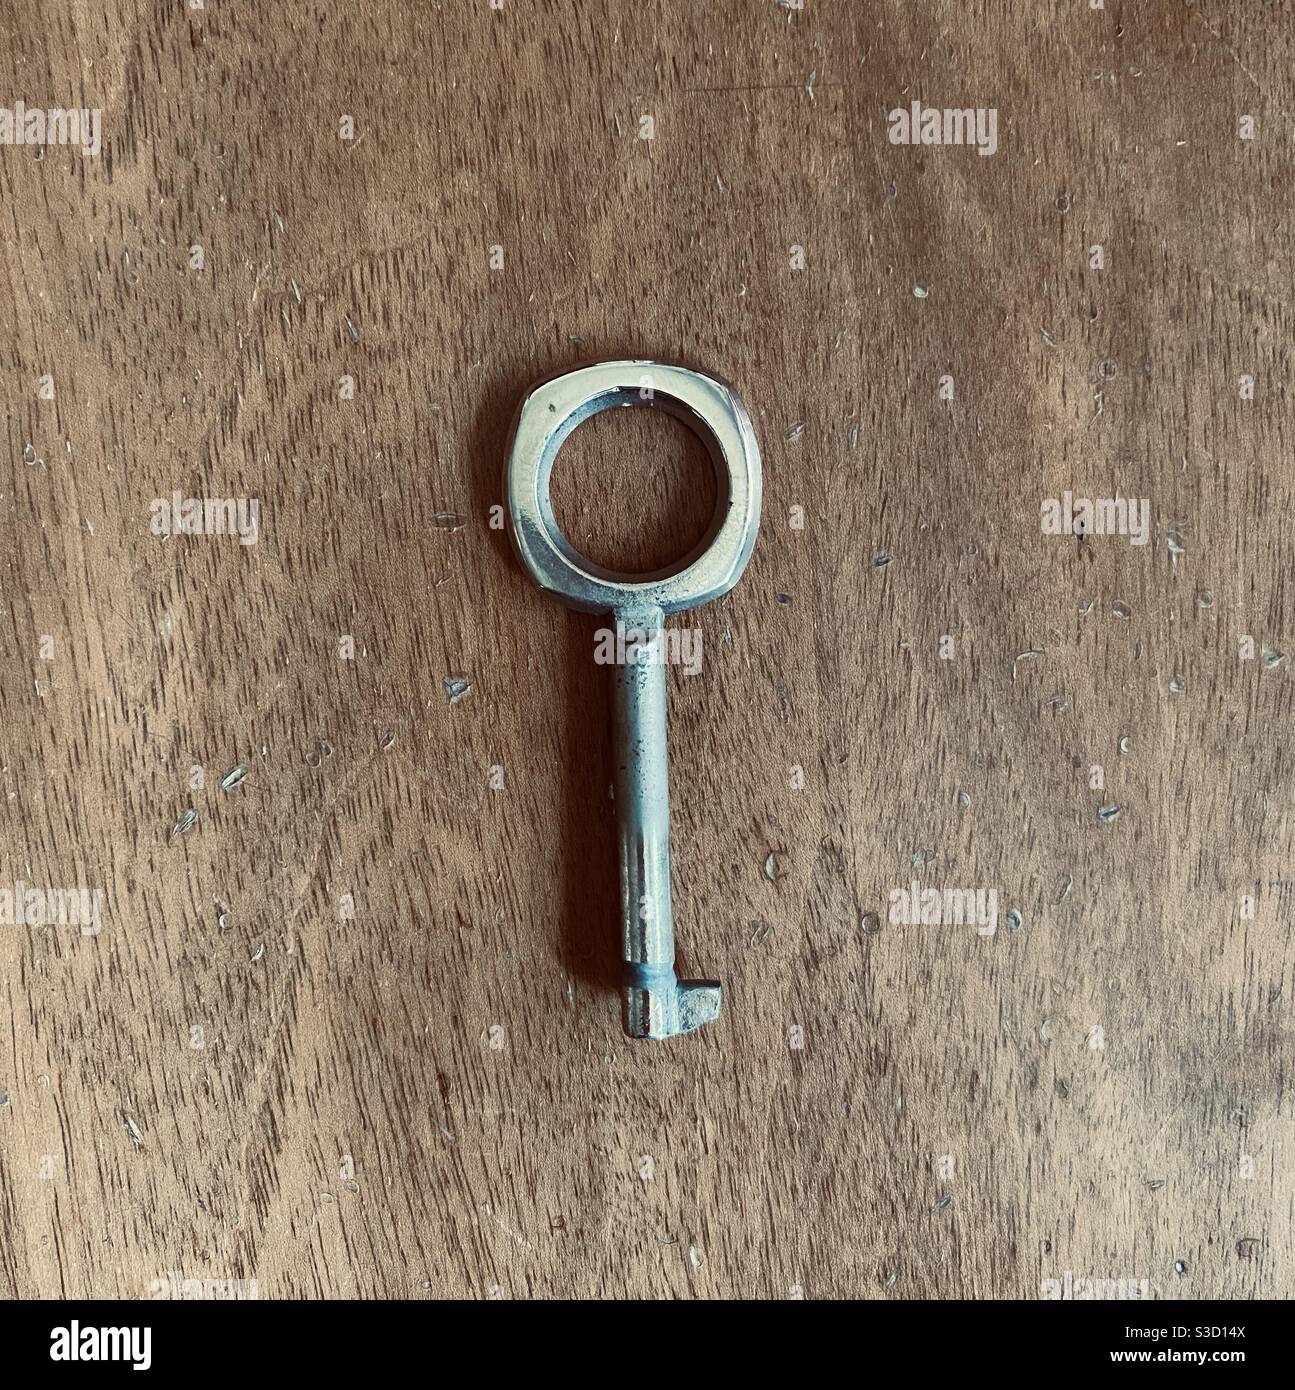 Metal key on wood Stock Photo